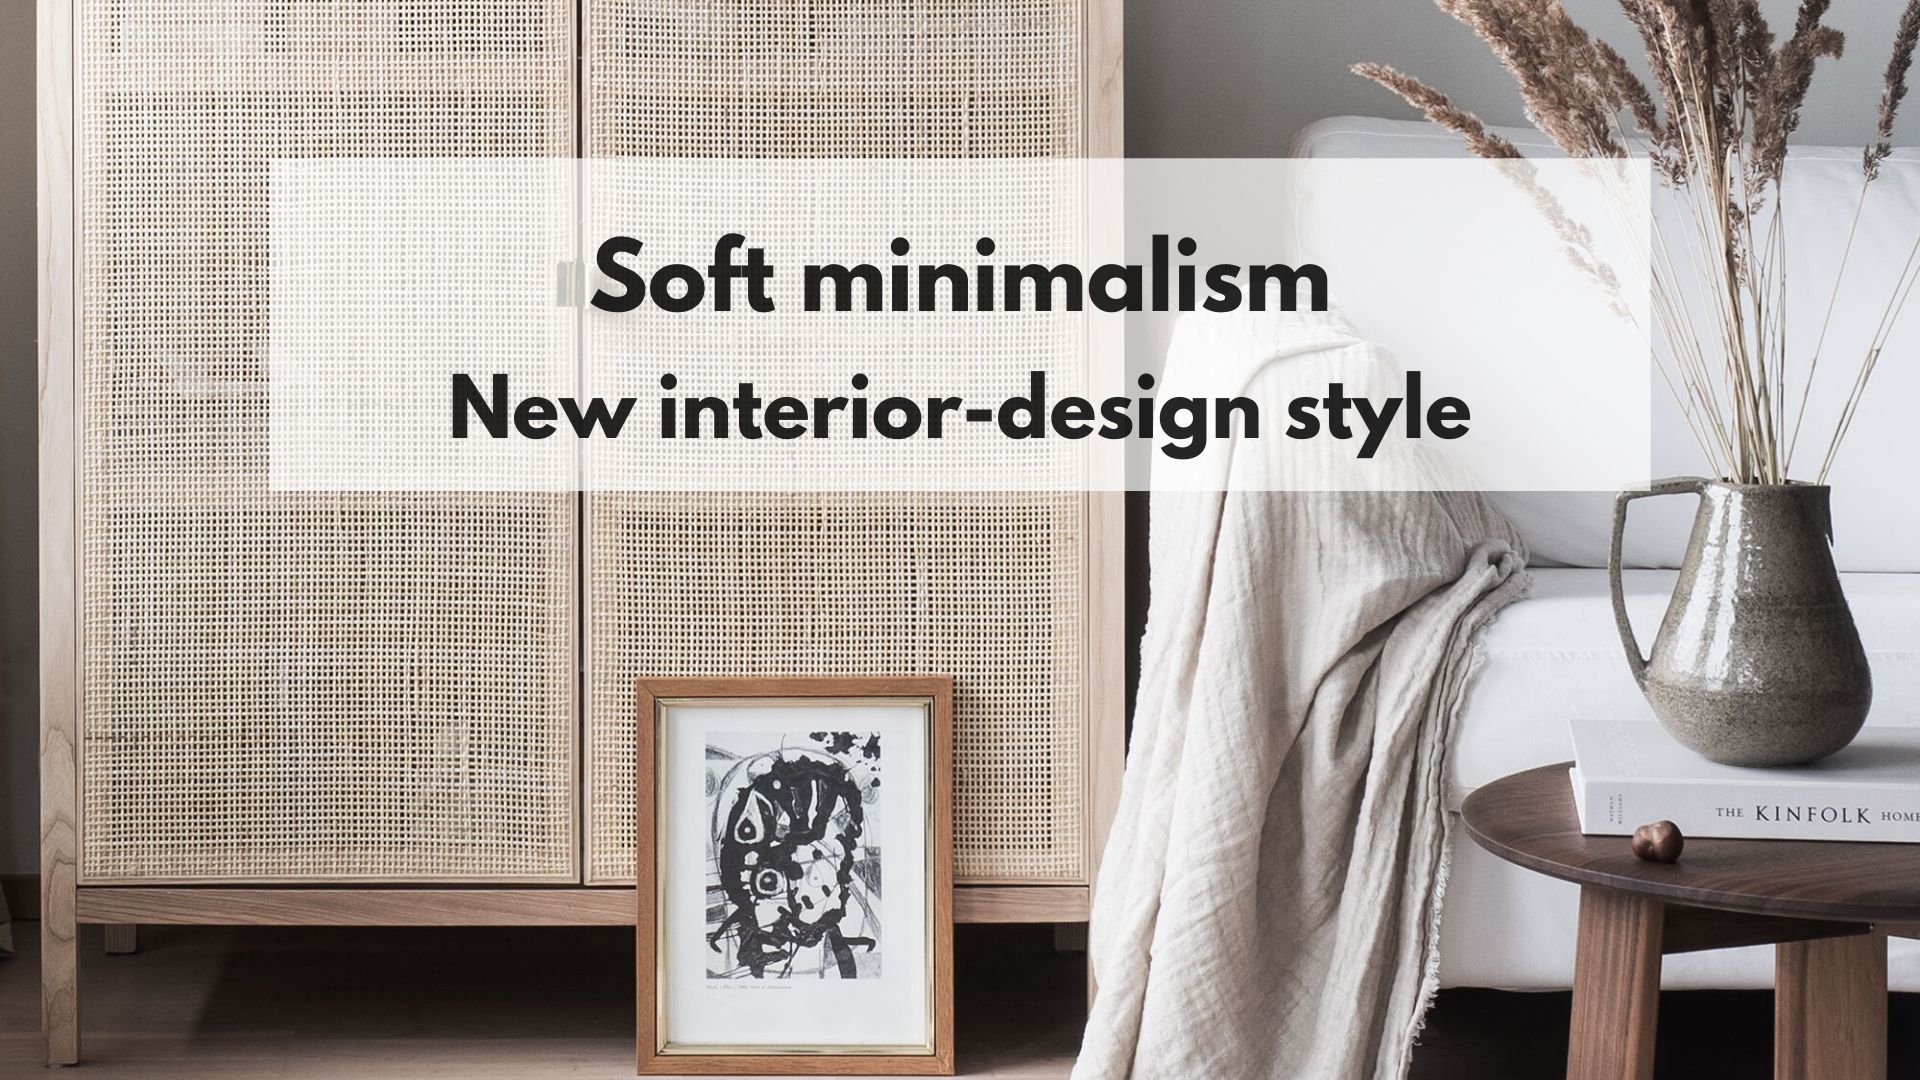 Soft minimalism article